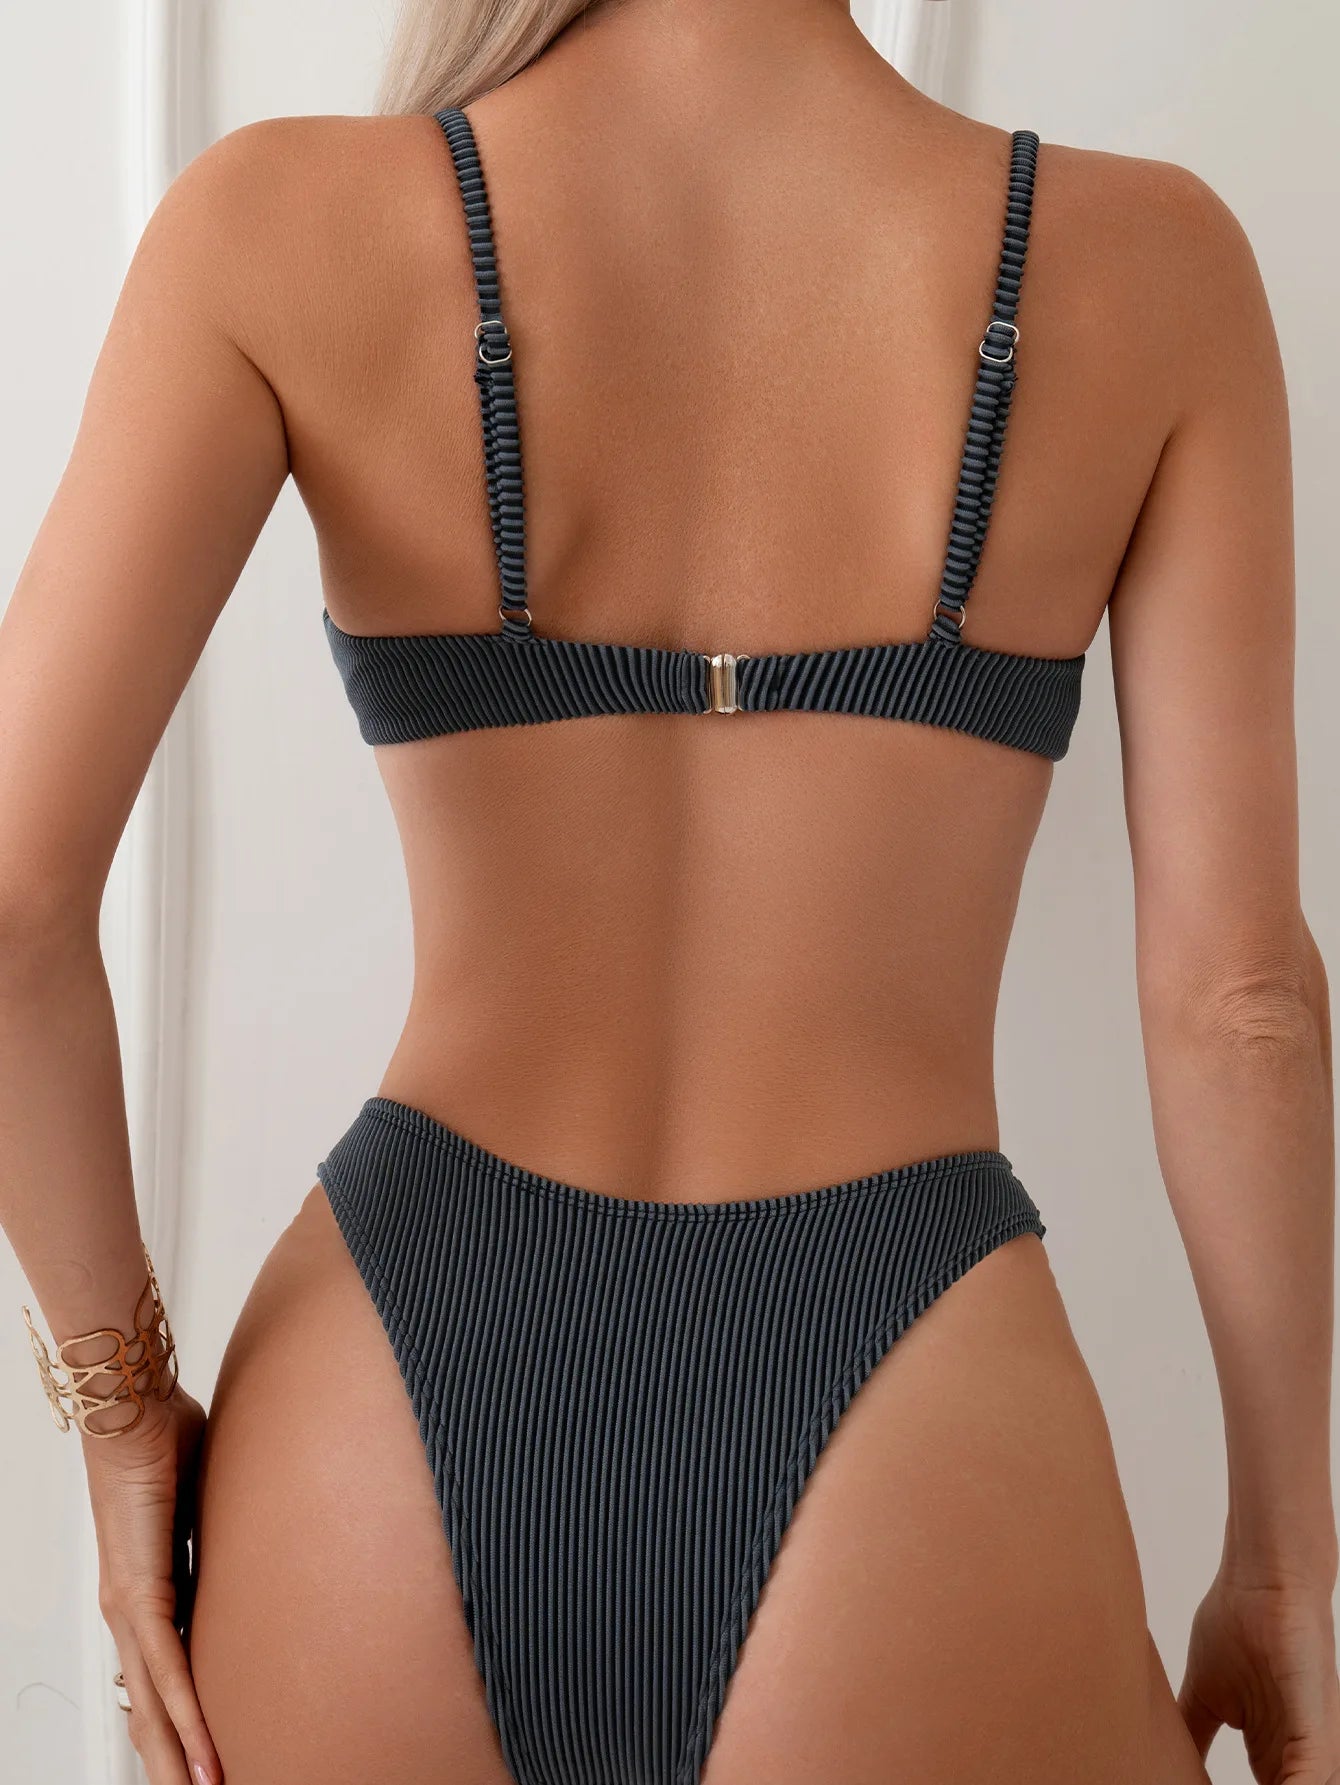 2 Piece Push Up Bikini Set Black Women Swimsuit Swimwear Thong Bathing Suit Beachwear